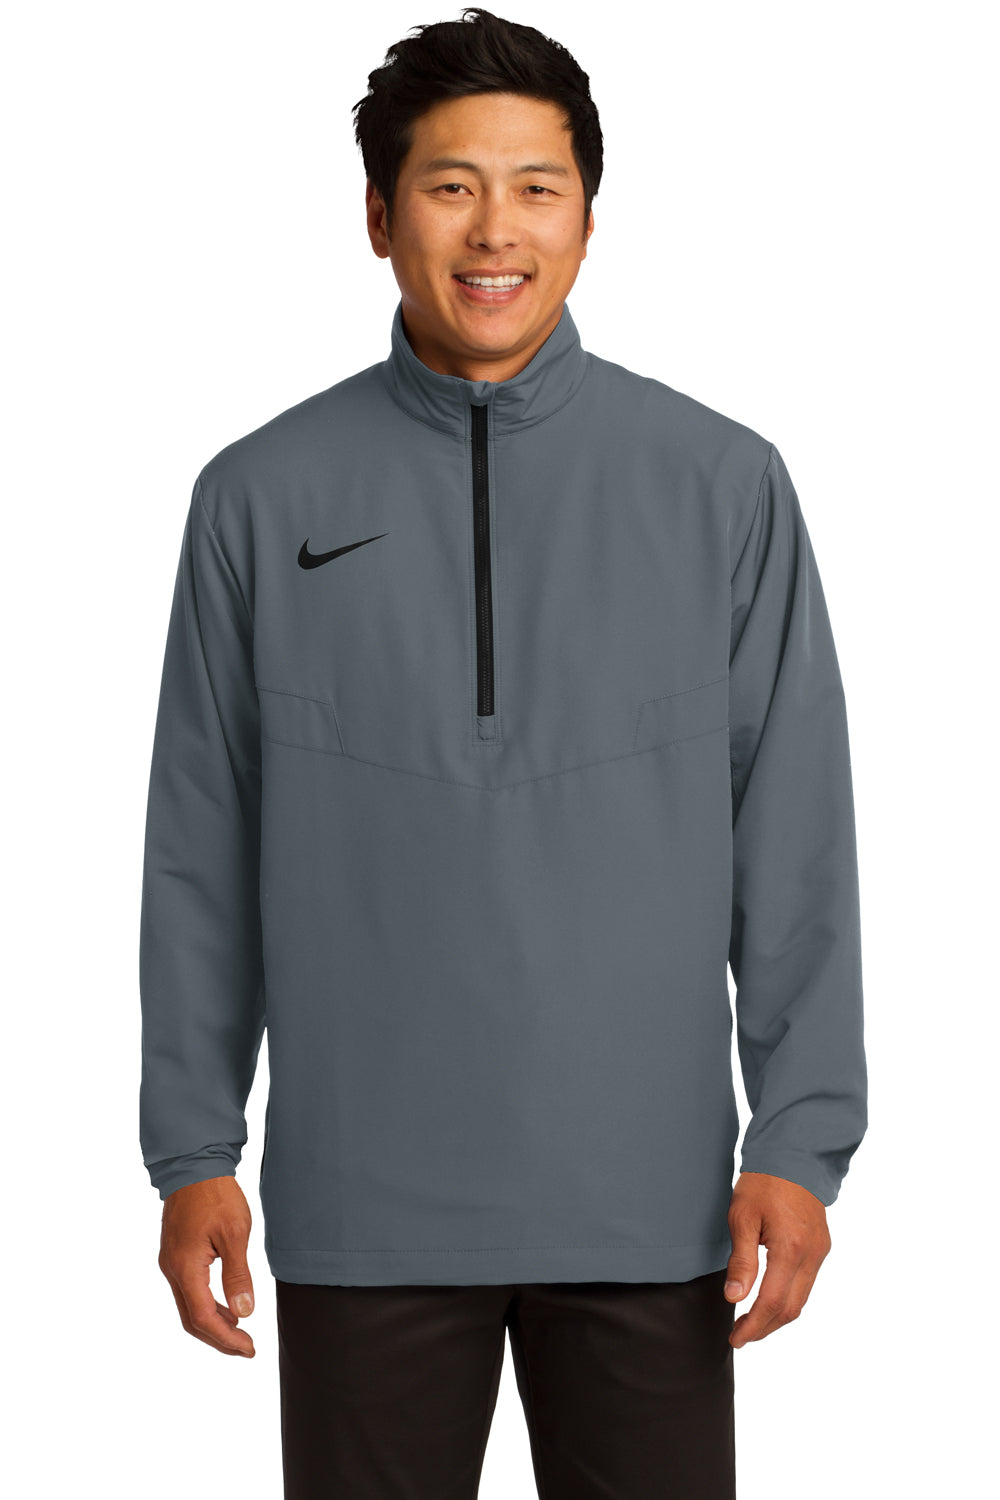 Nike 578675 Mens 1/4 Zip Wind Jacket Dark Grey Front